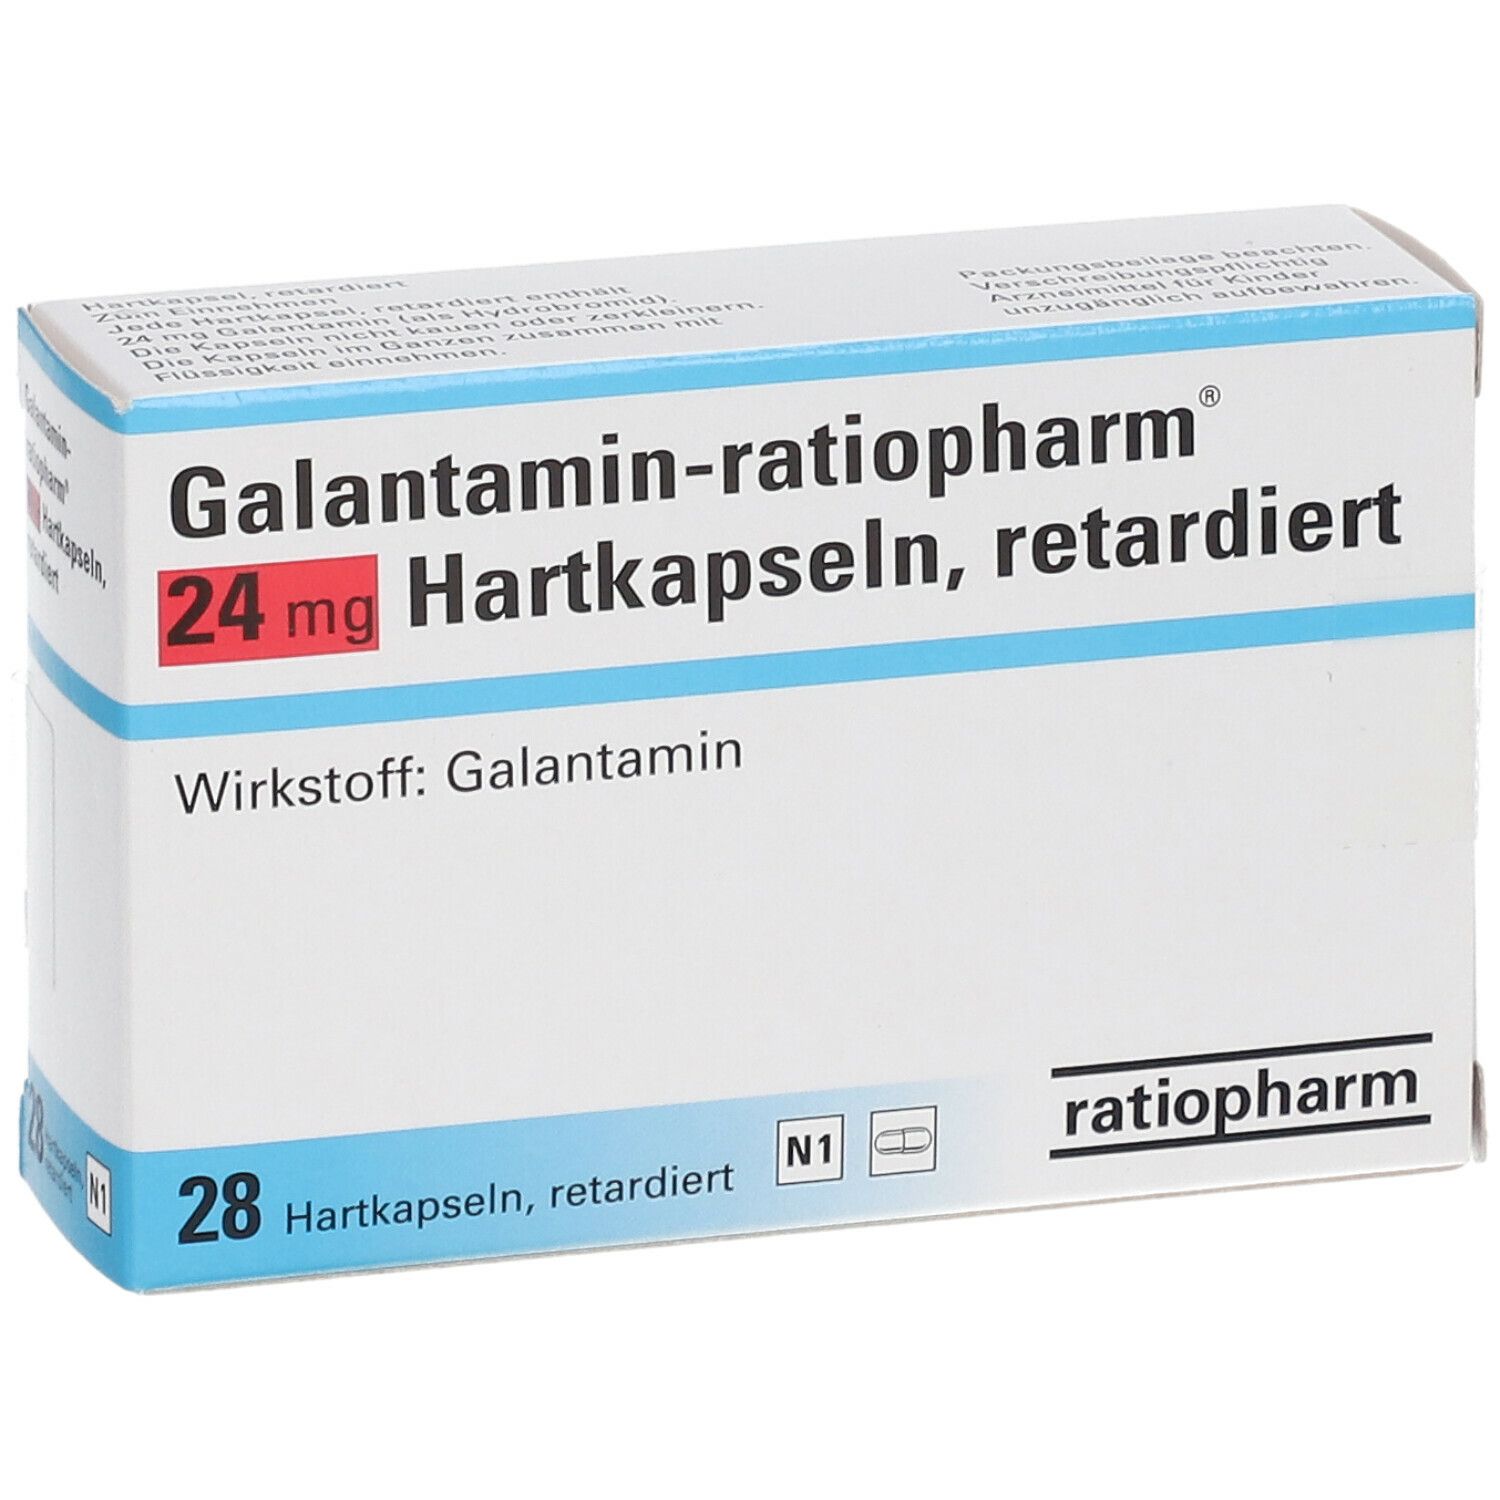 Galantamin-ratiopharm® 24 mg